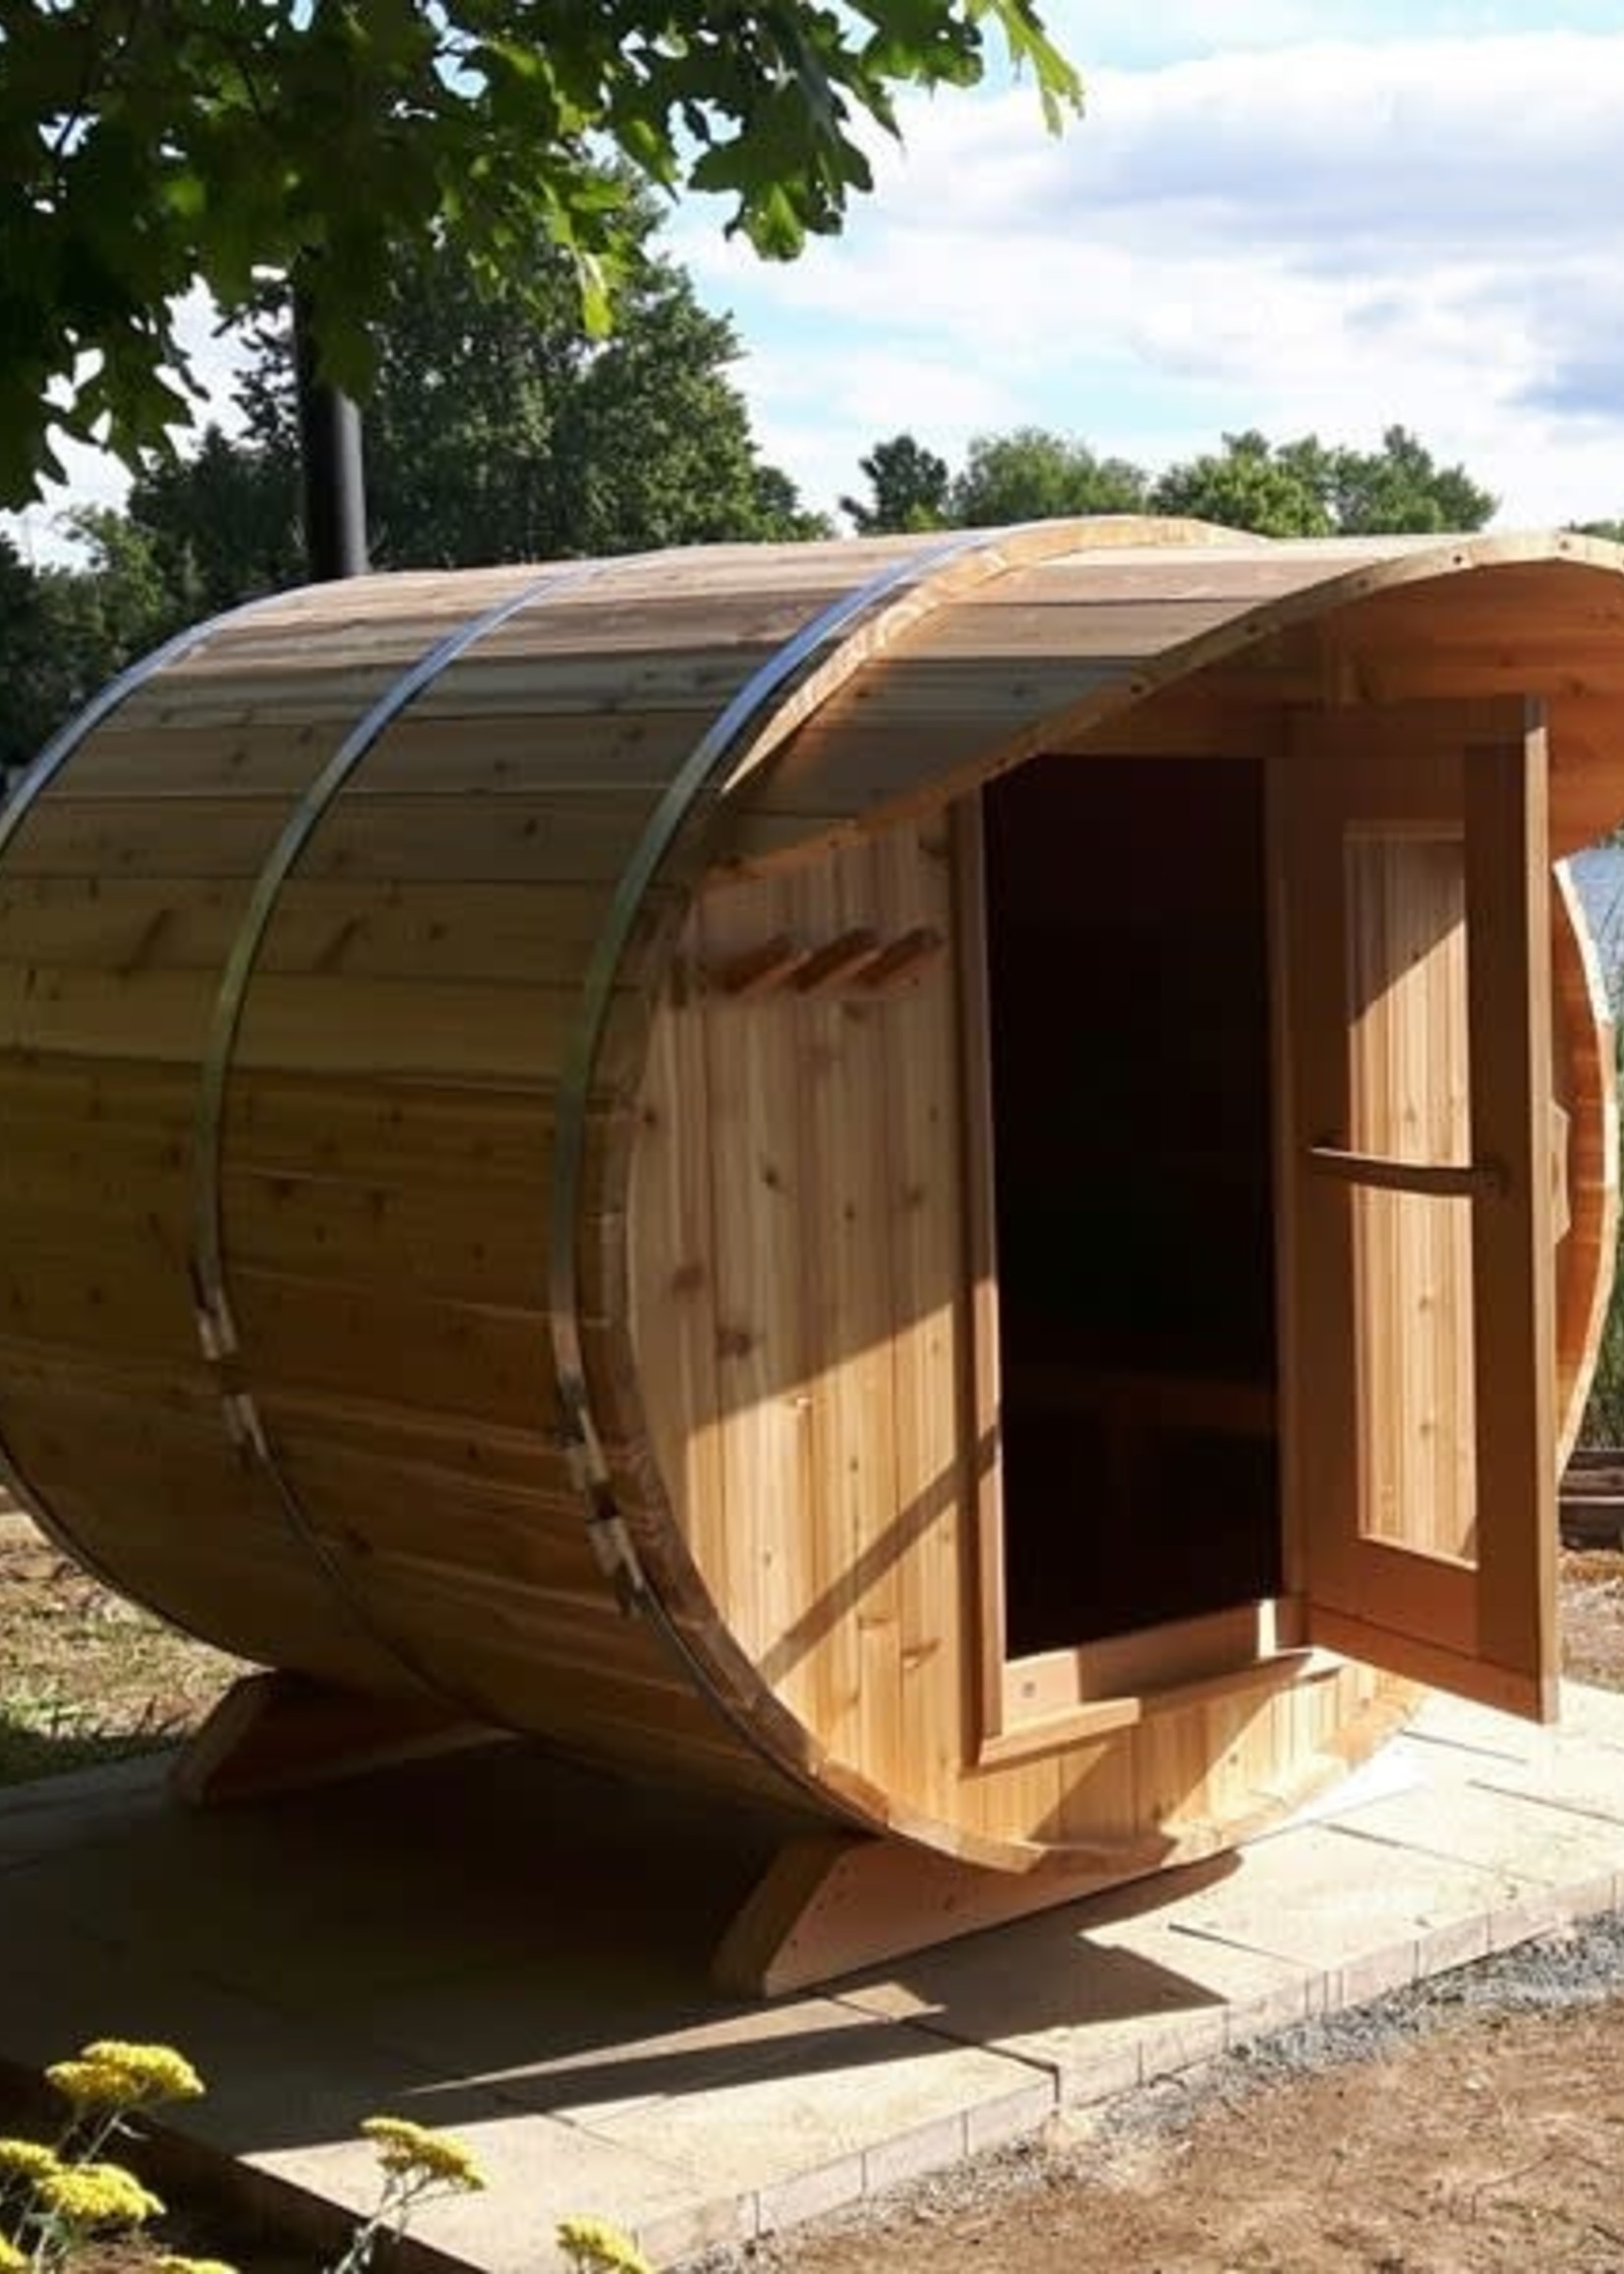 Leisure Craft Barrel Sauna